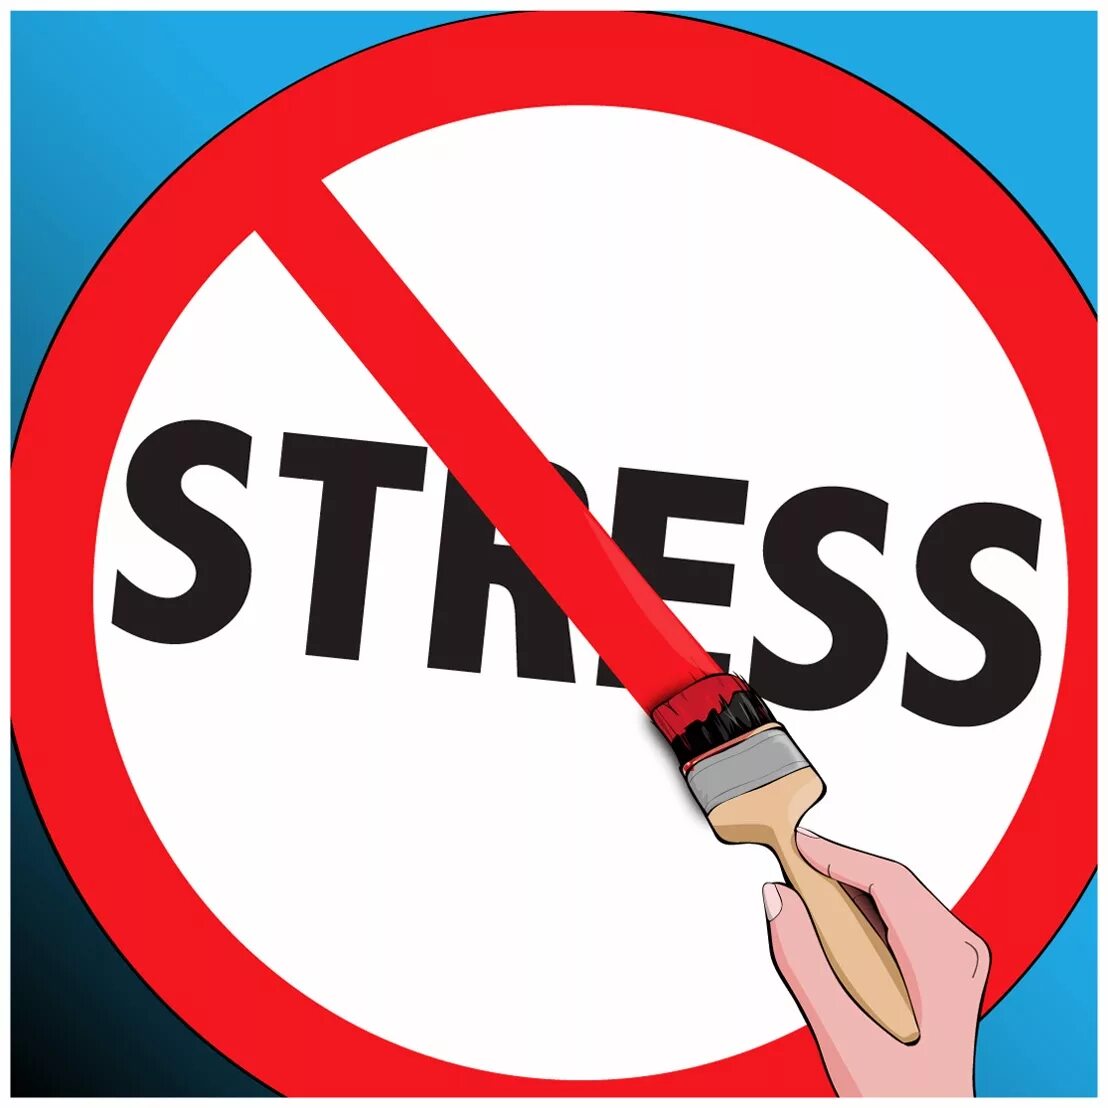 Av id. Избегайте стресса рисунок. Борьба со стрессом. Нет стрессу. Стресс борьба со стрессом.